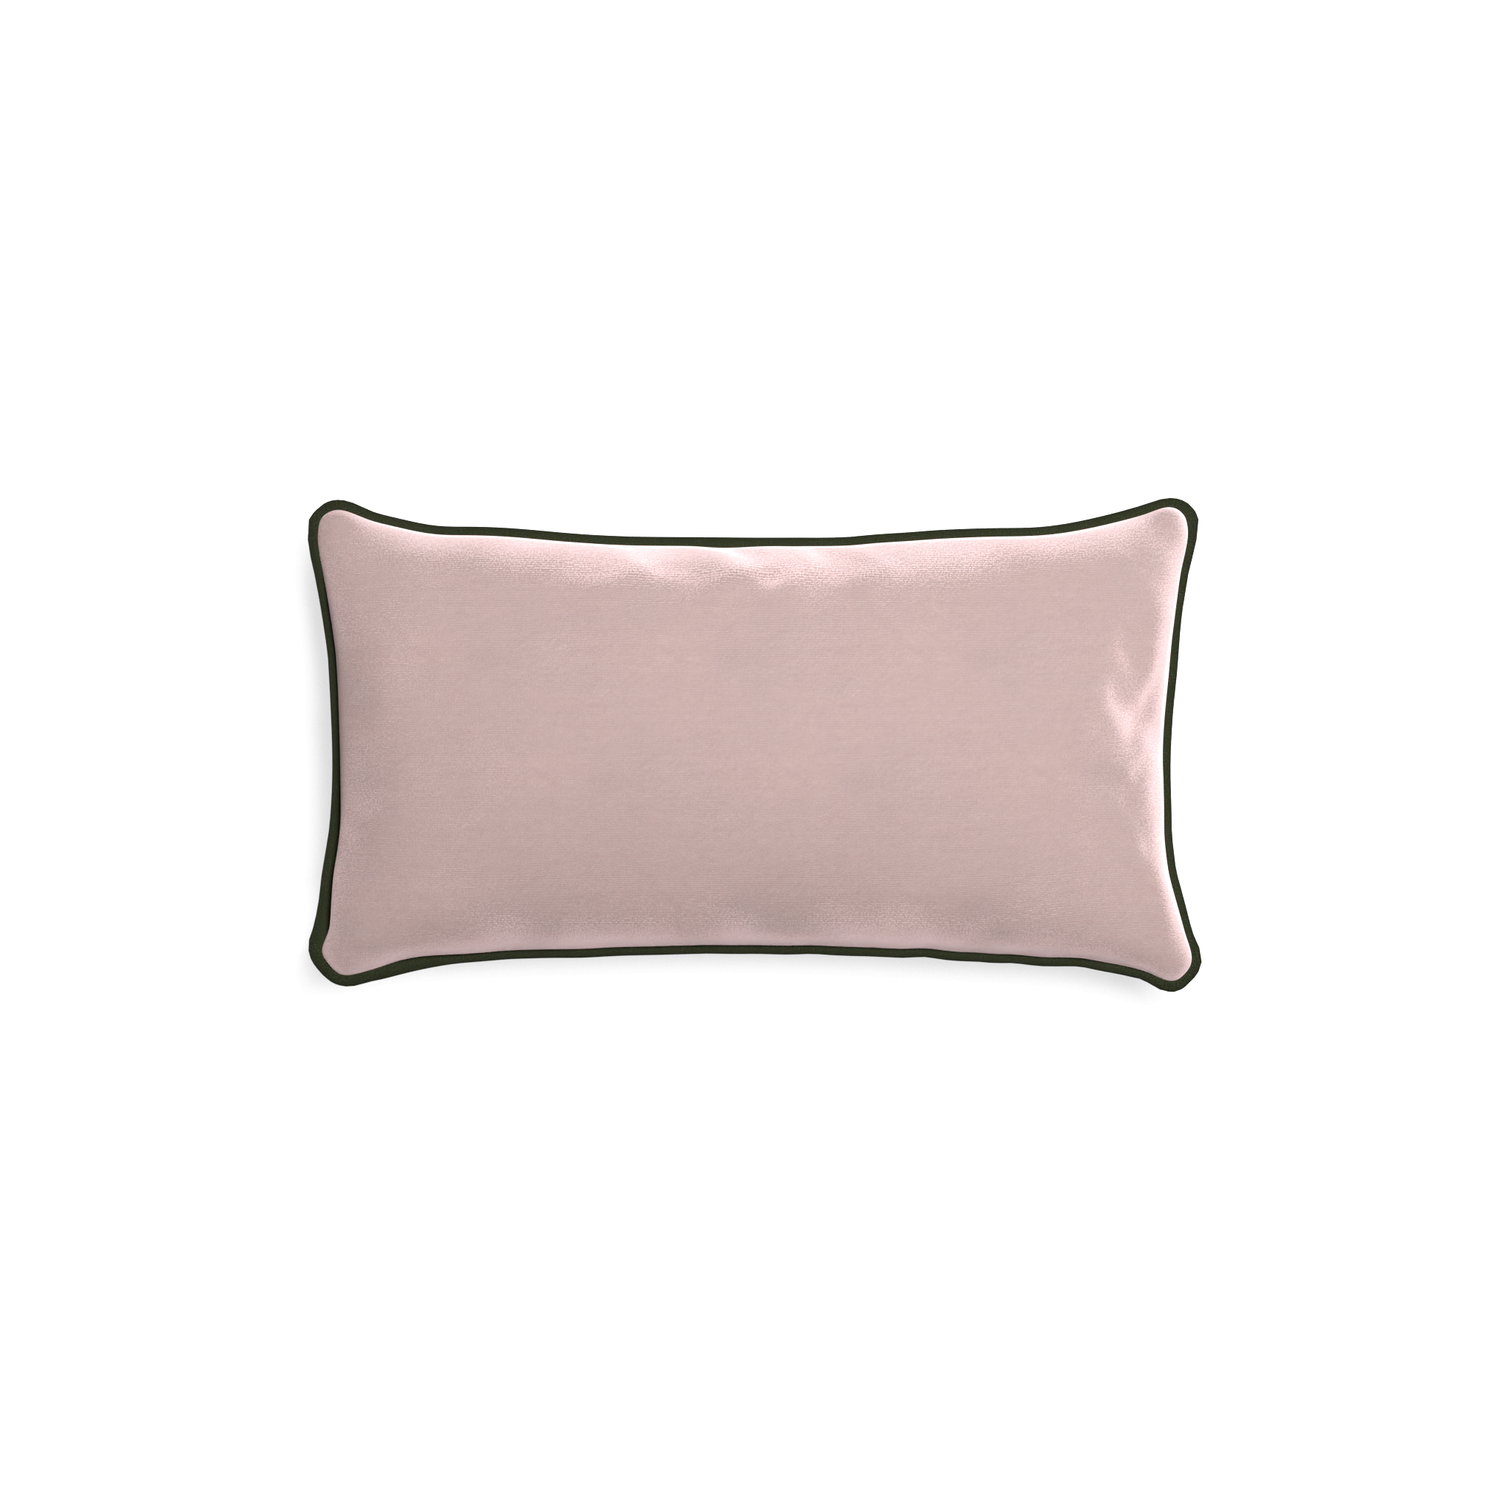 rectangle light pink velvet pillow with fern green piping